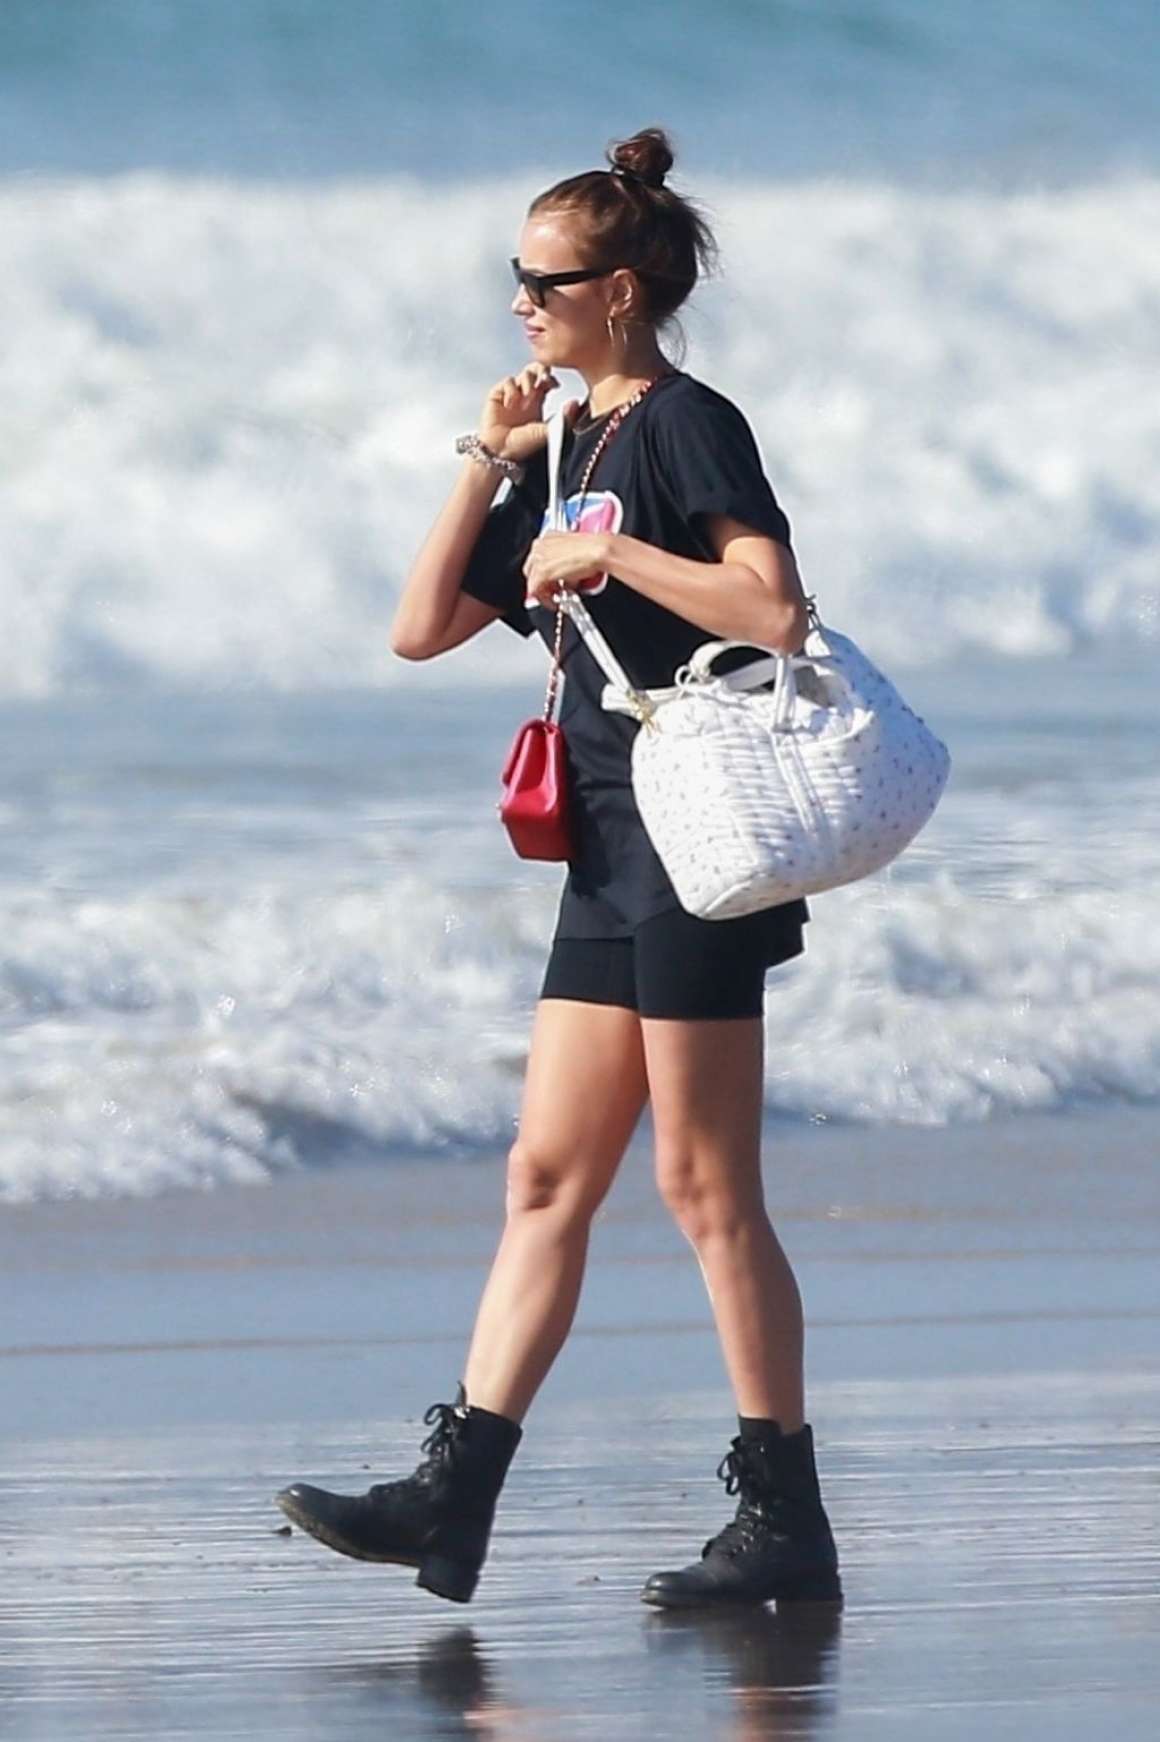 Irina Shayk at the Beach in Santa Monica